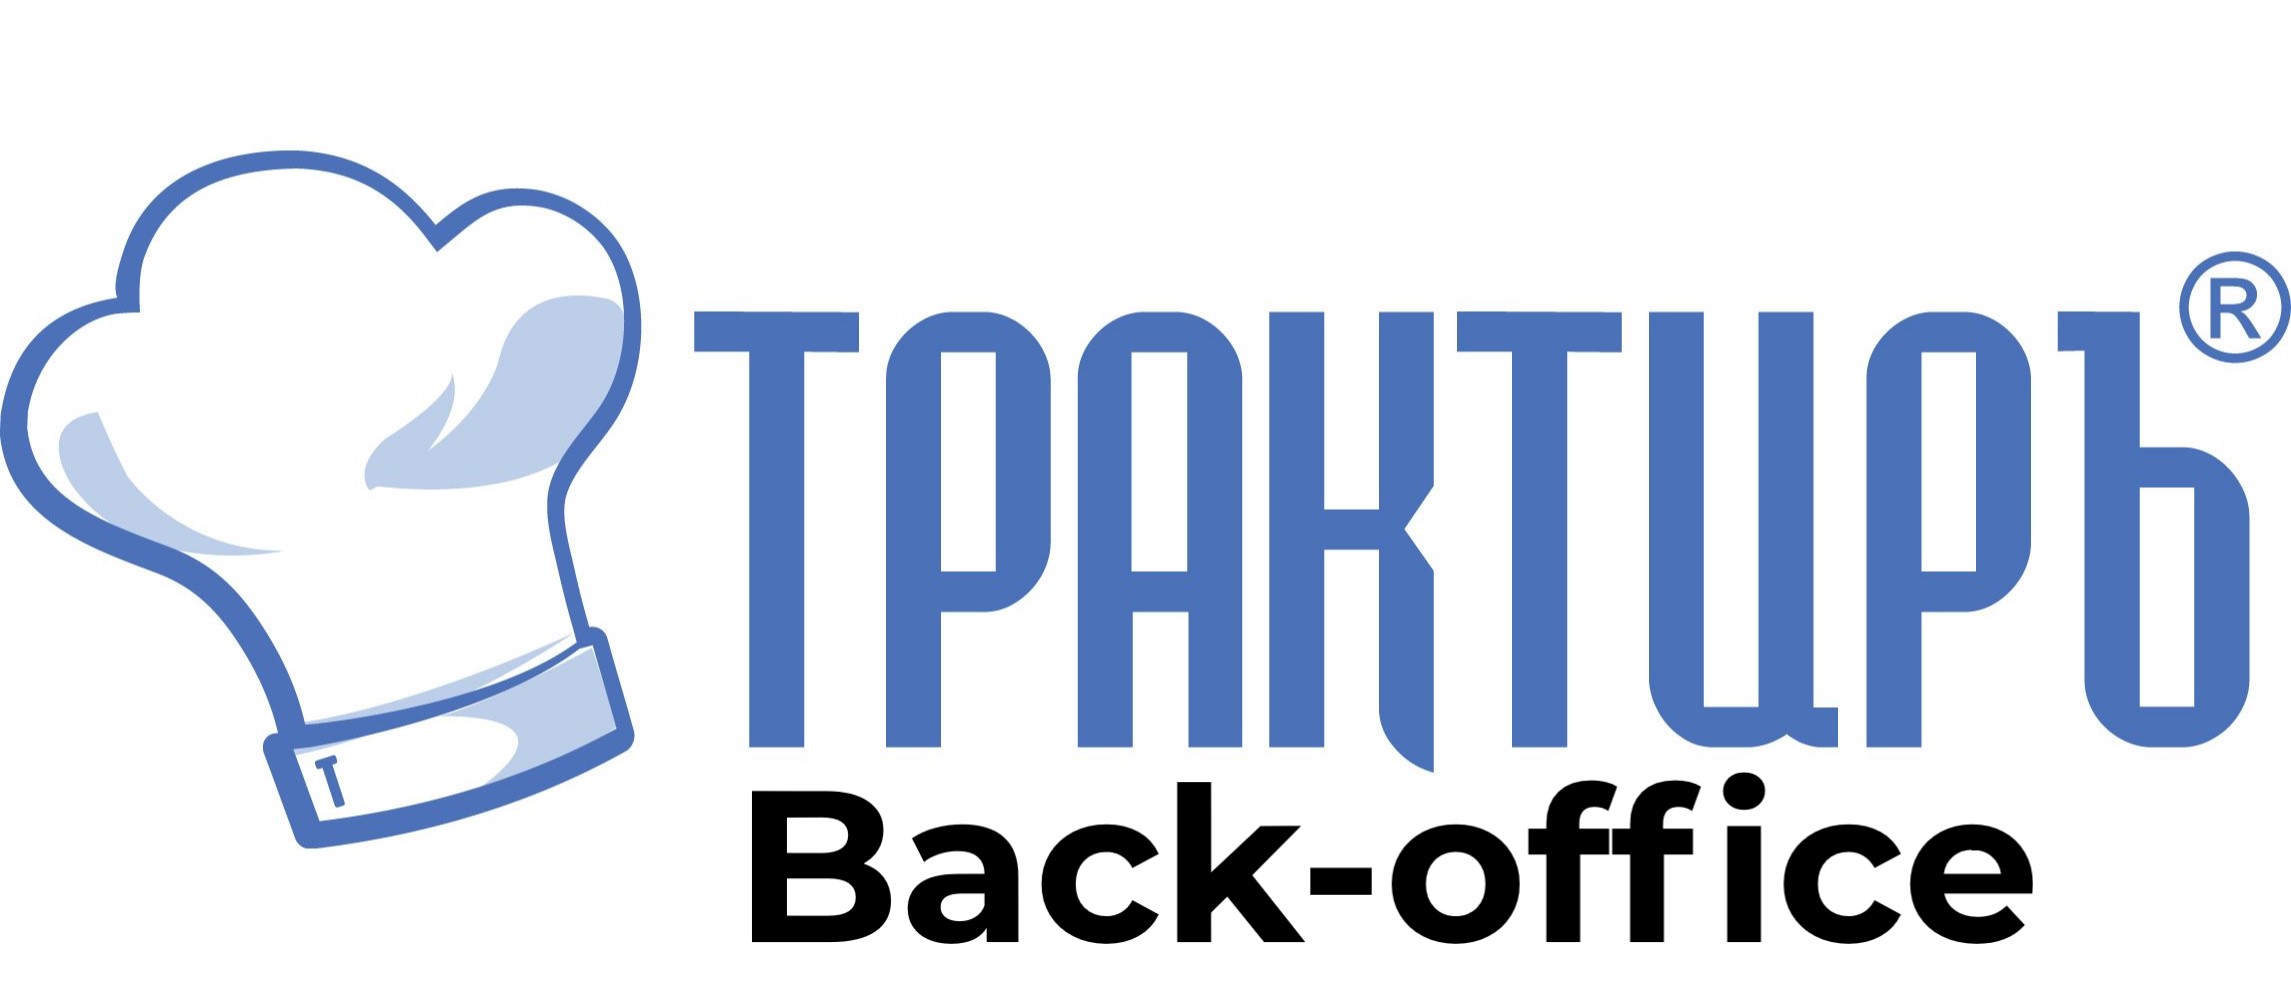 Трактиръ Back-Office ПРОФ, ред. 3.0 Основная поставка в Нижнем Новгороде